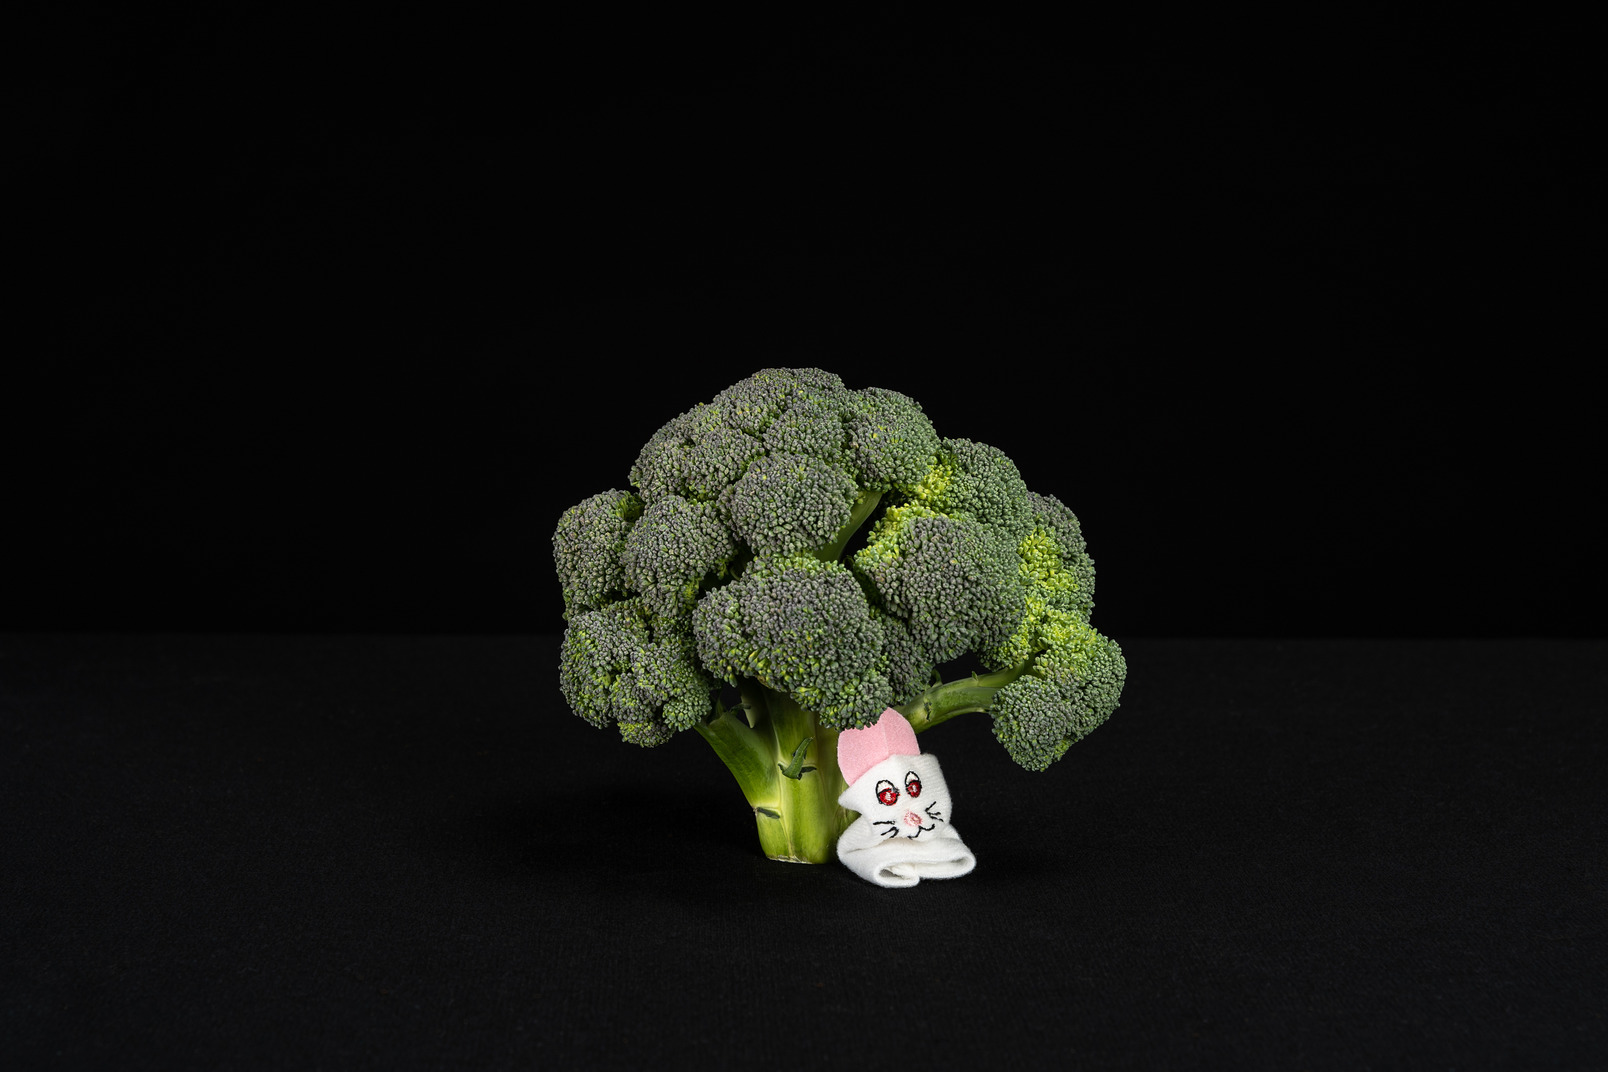 White toy rabbit under broccoli tree in black background